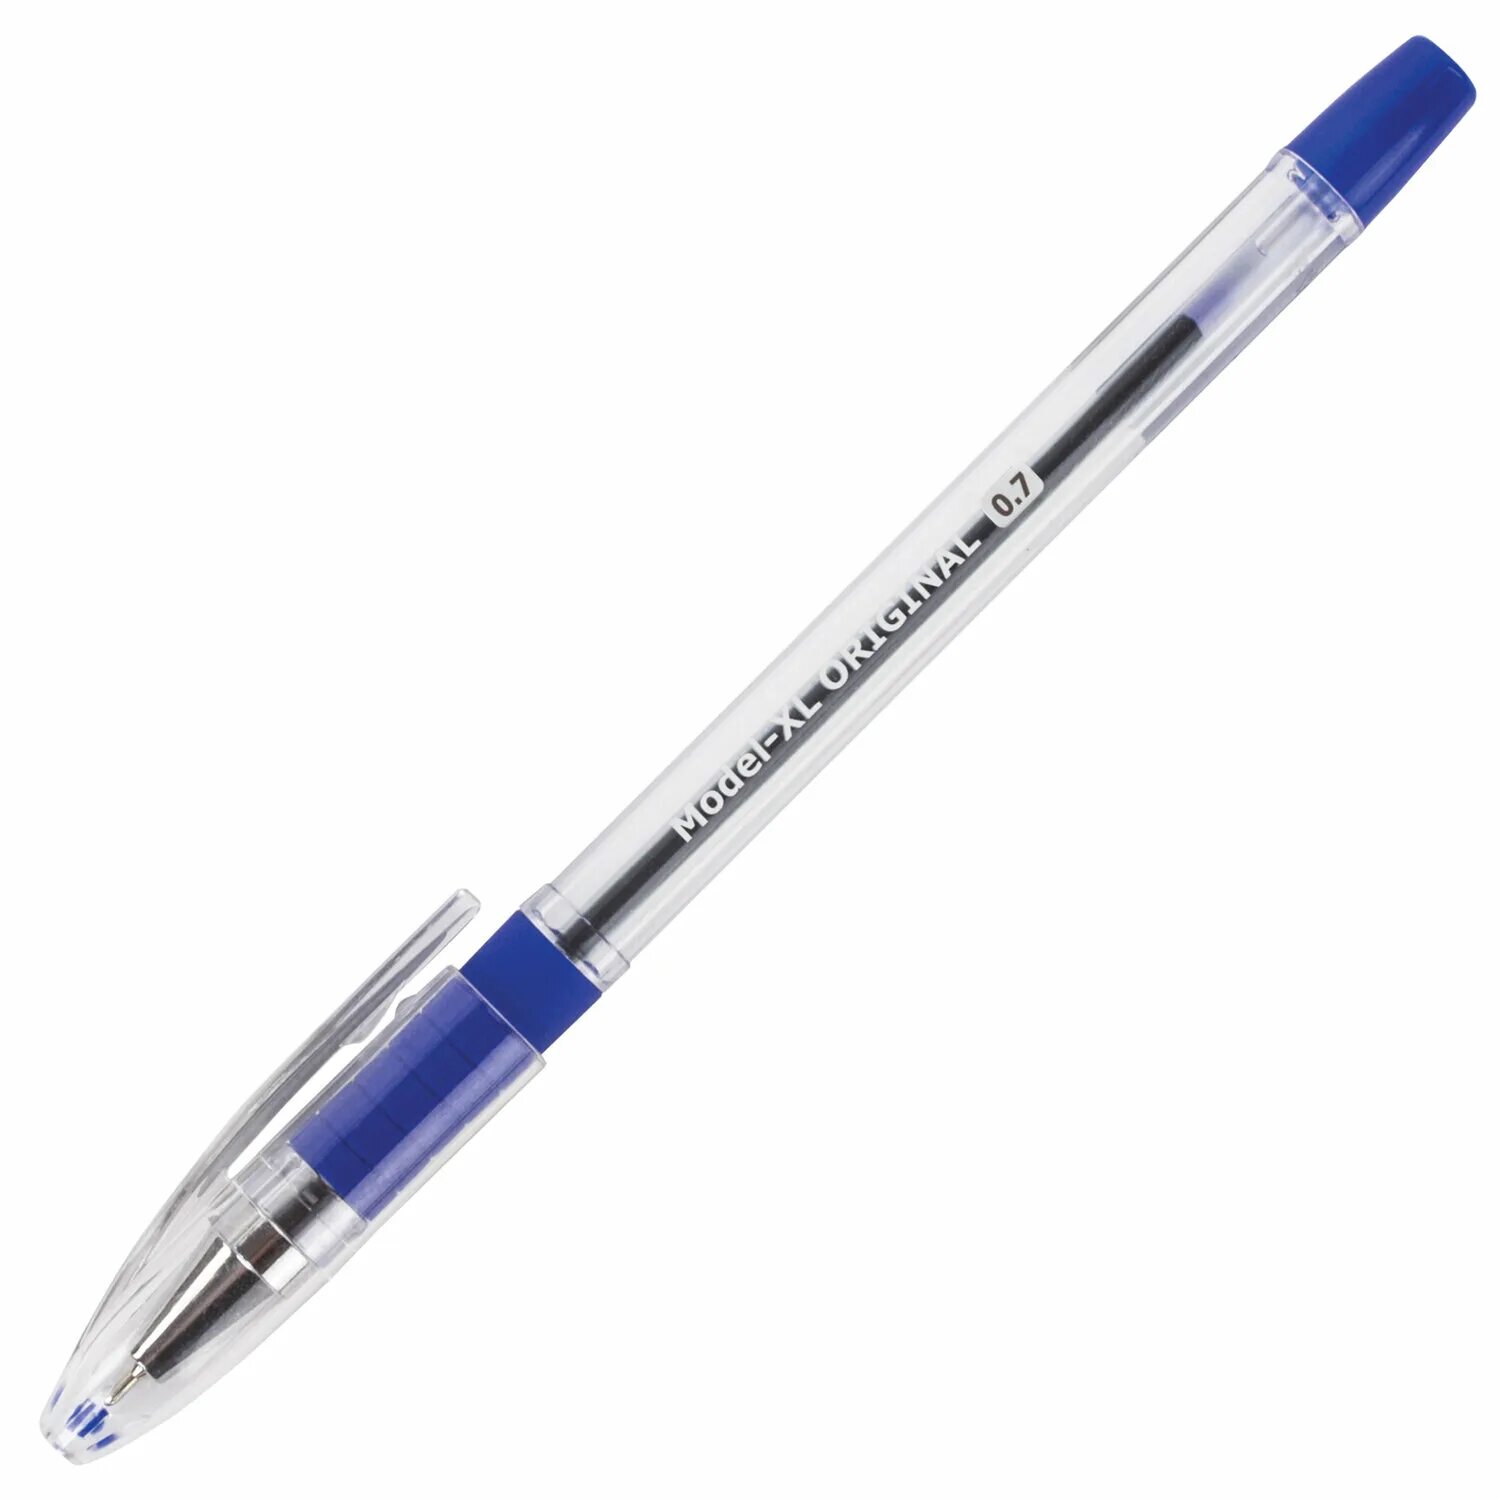 Ручка шариковая BIC Cristal (синий). Ручка шариковая BRAUBERG Samurai 141149 цвет синий. Ручка BIC Cristal 1.6 mm. Ручка БРАУБЕРГ 0.7 масляная.